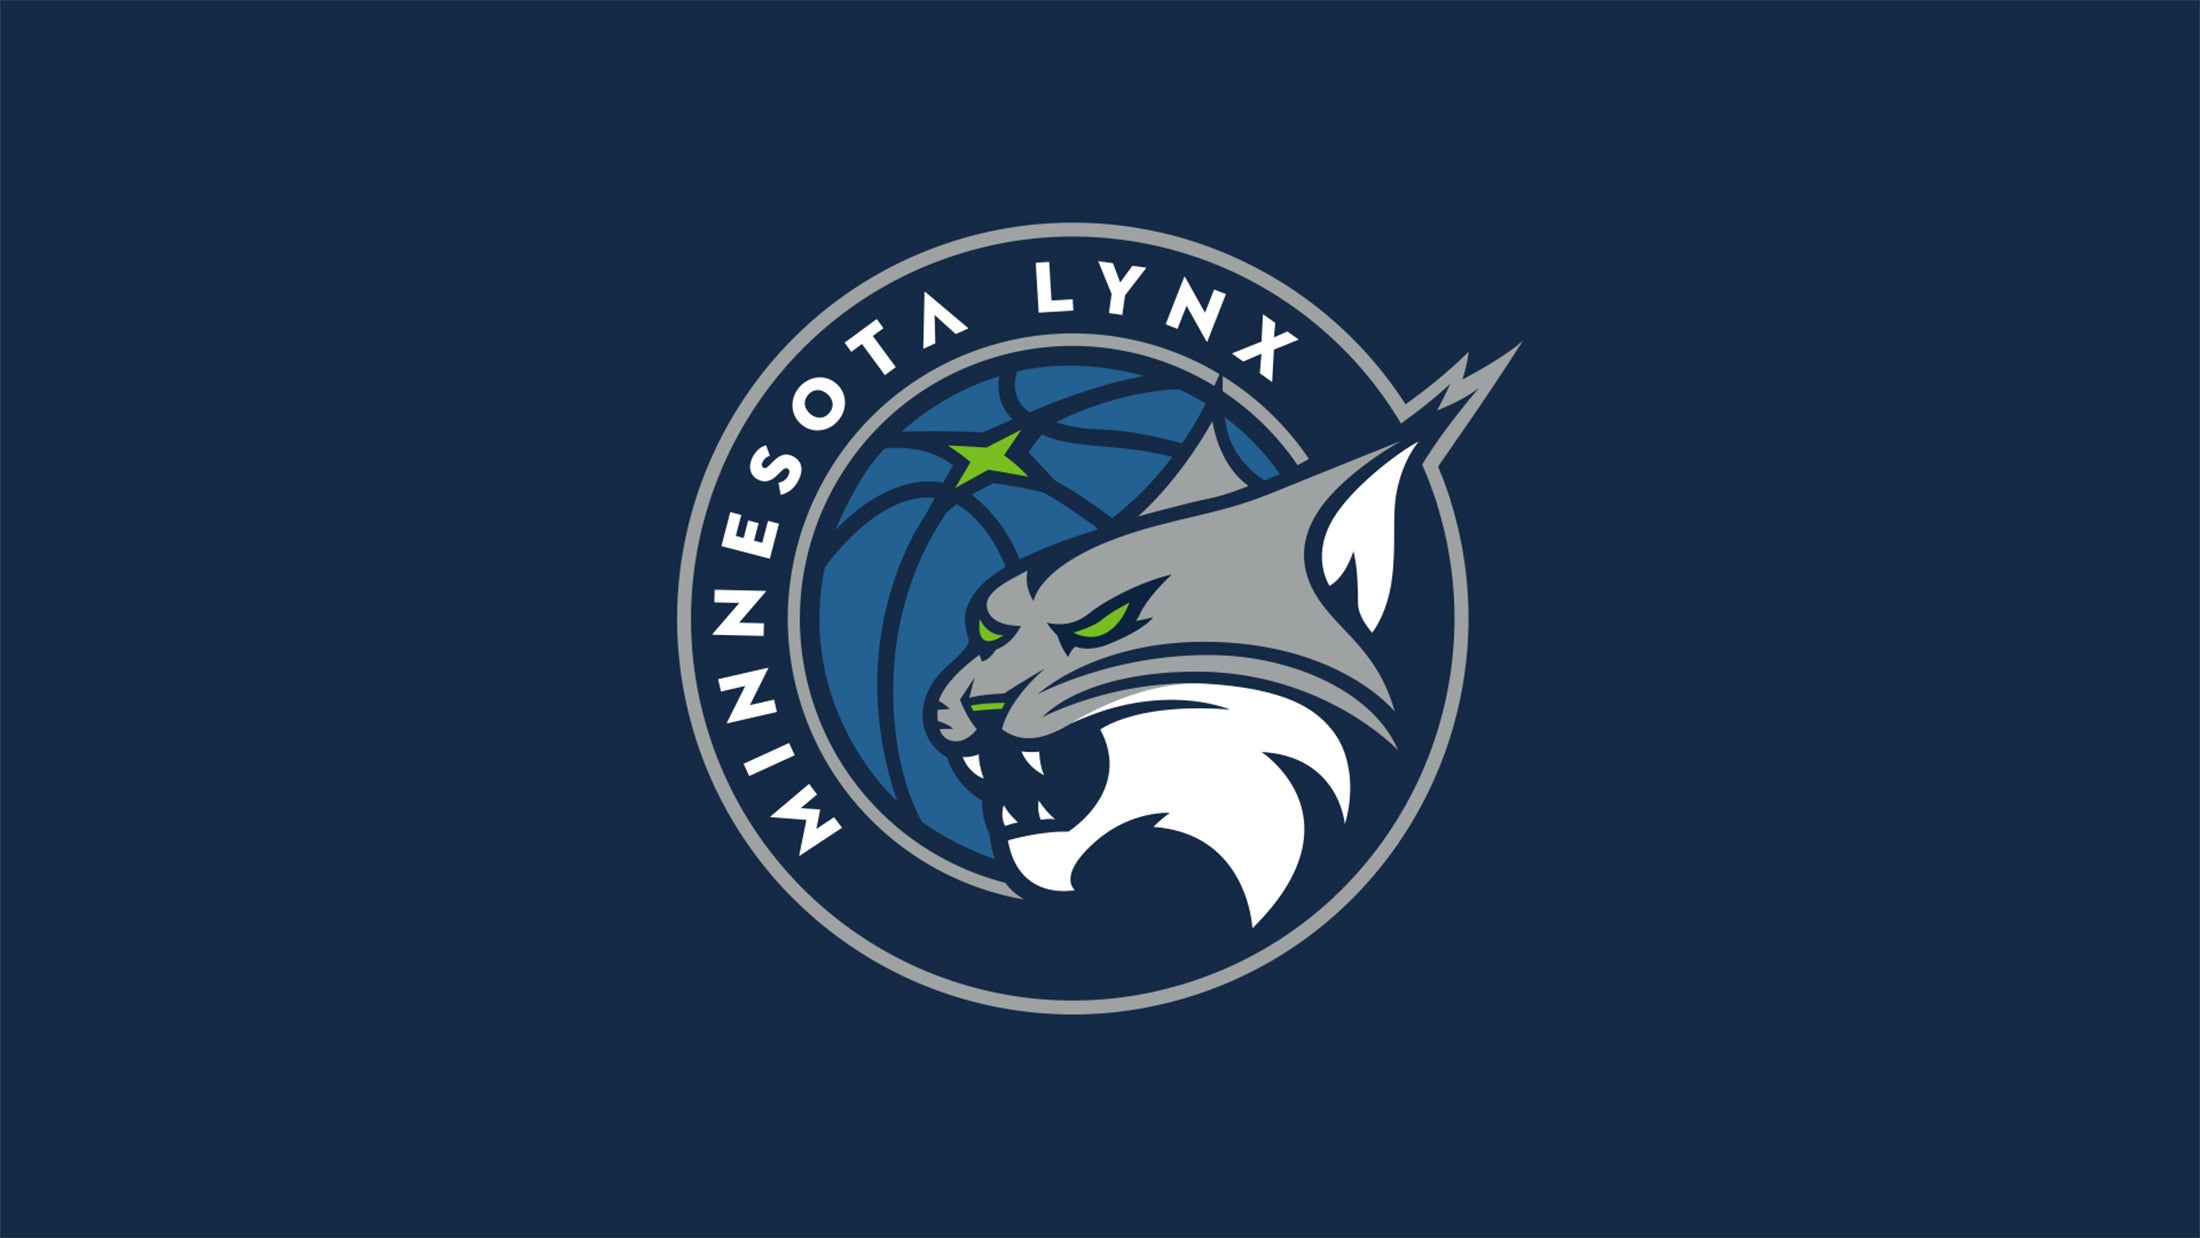 Minnesota Lynx vs. Connecticut Sun at Target Center